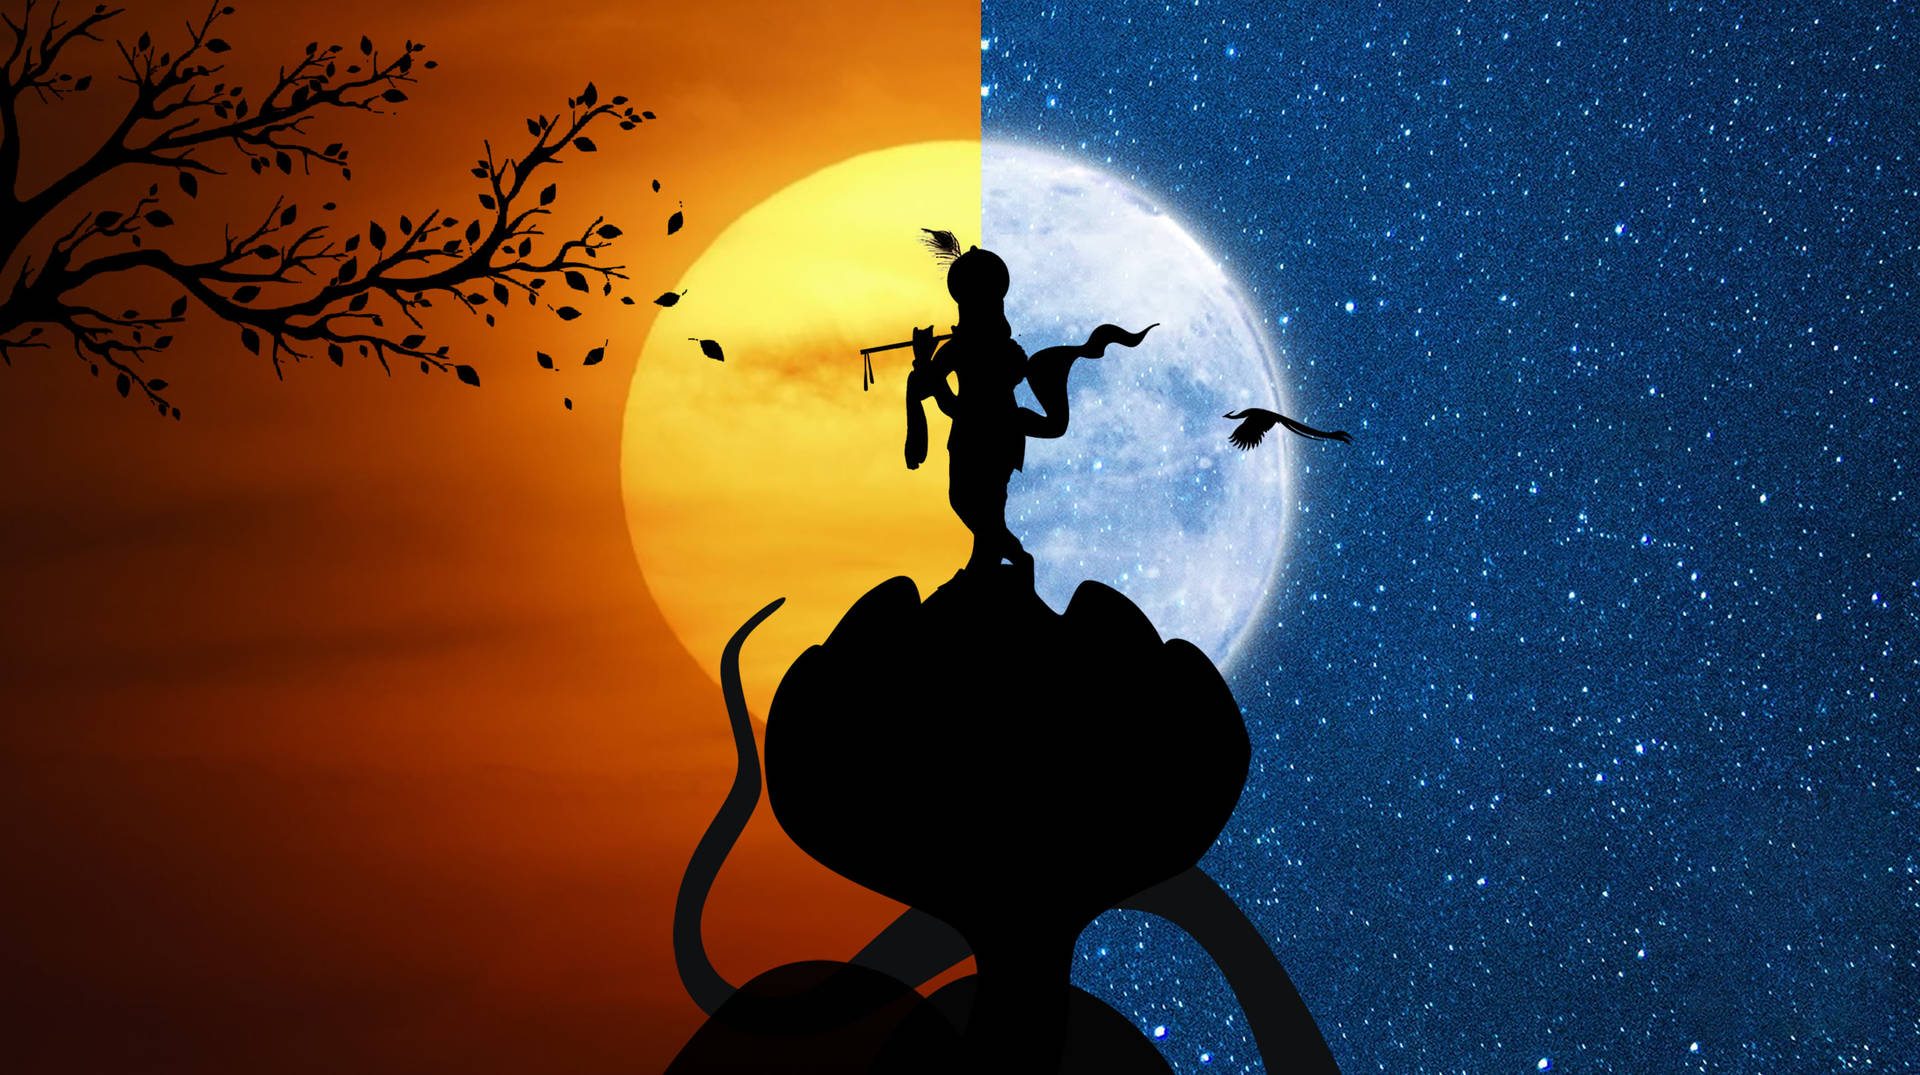 Shri Krishna Day And Night Silhouette